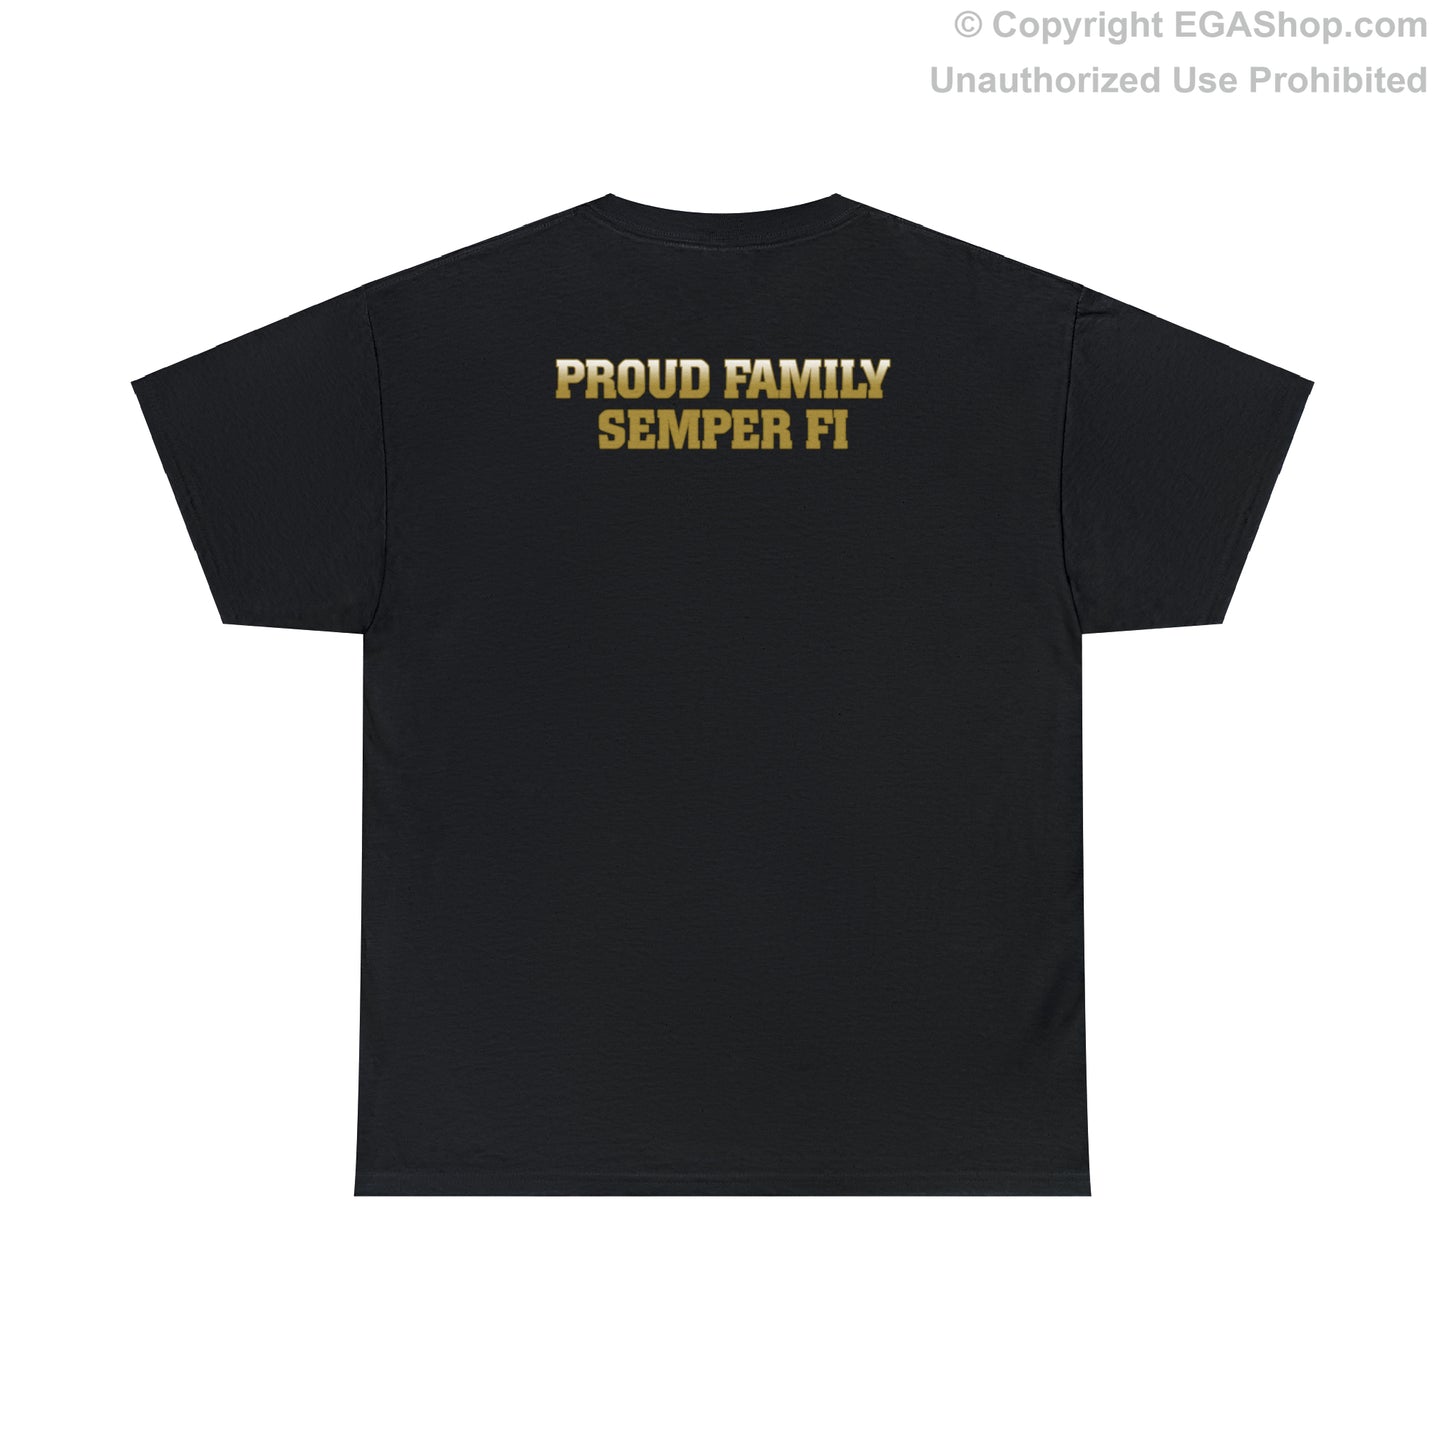 T-Shirt: Echo Co. MCRD Parris Island (EGA + Back Proud Family)